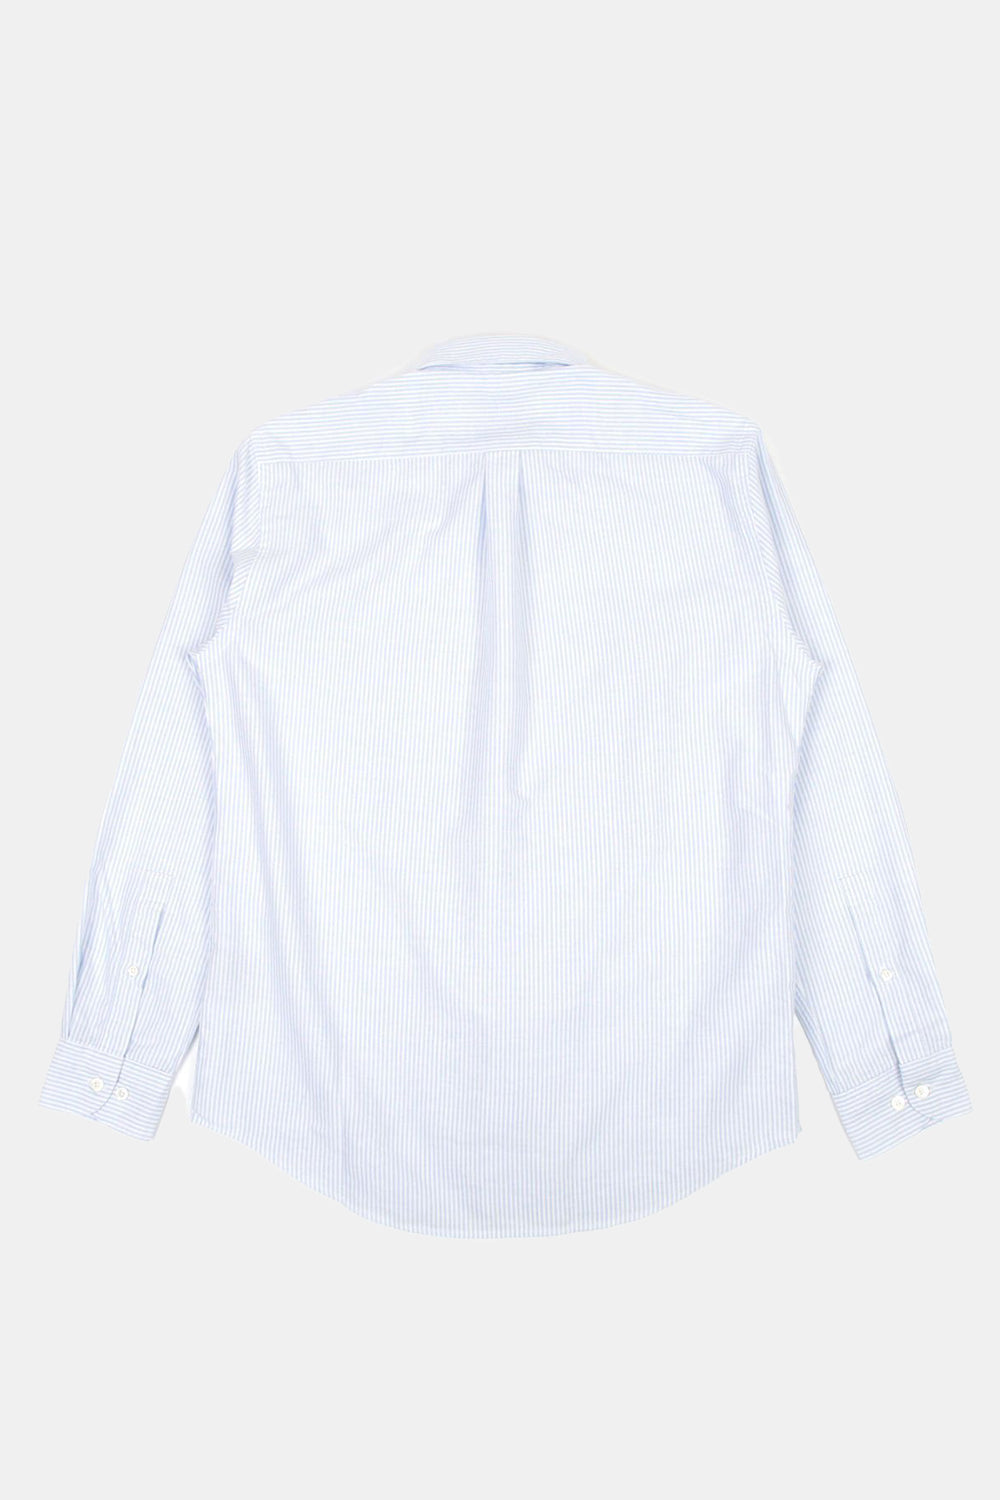 Portuguese Flannel Belavista Stripe Shirt (Sky) | Number Six